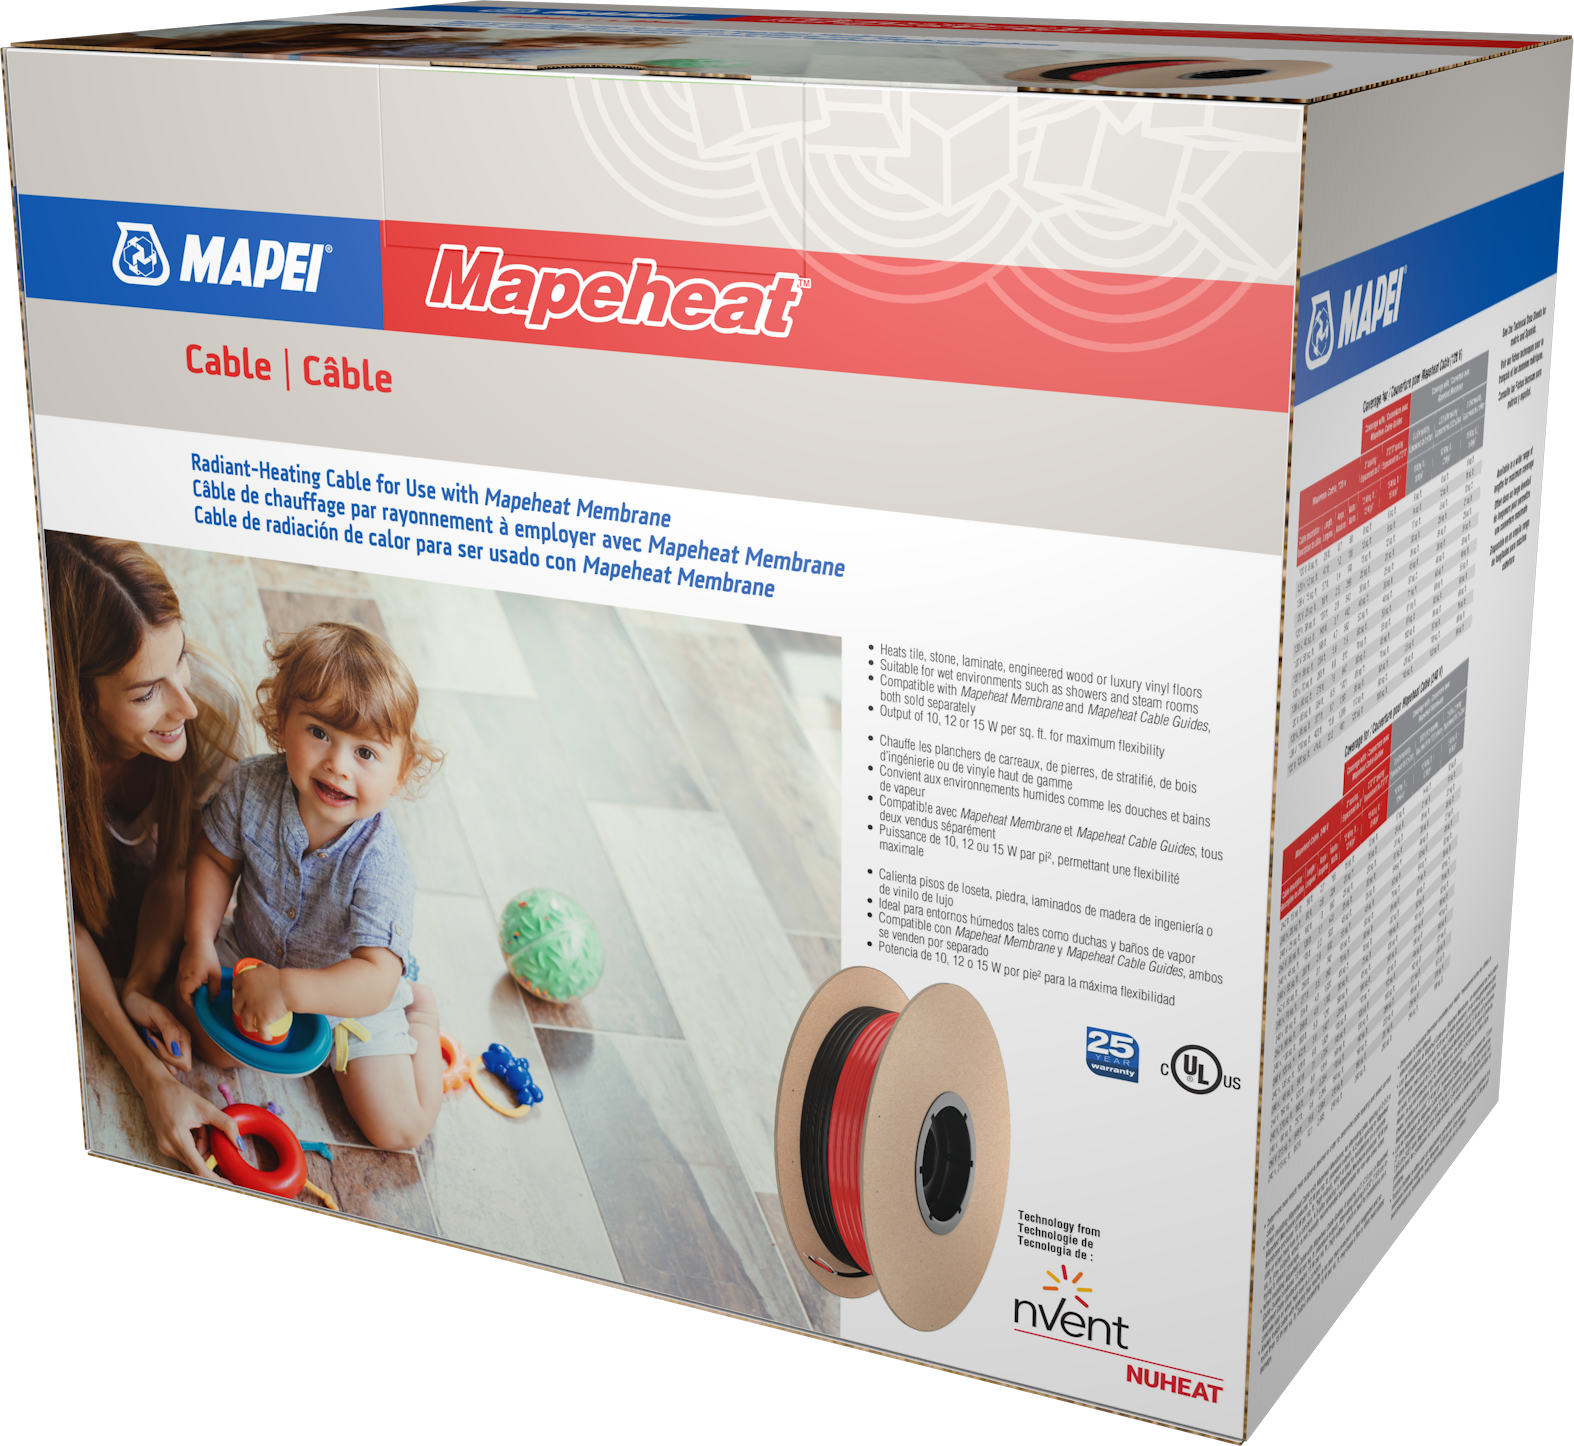 Mapei (2855101) product